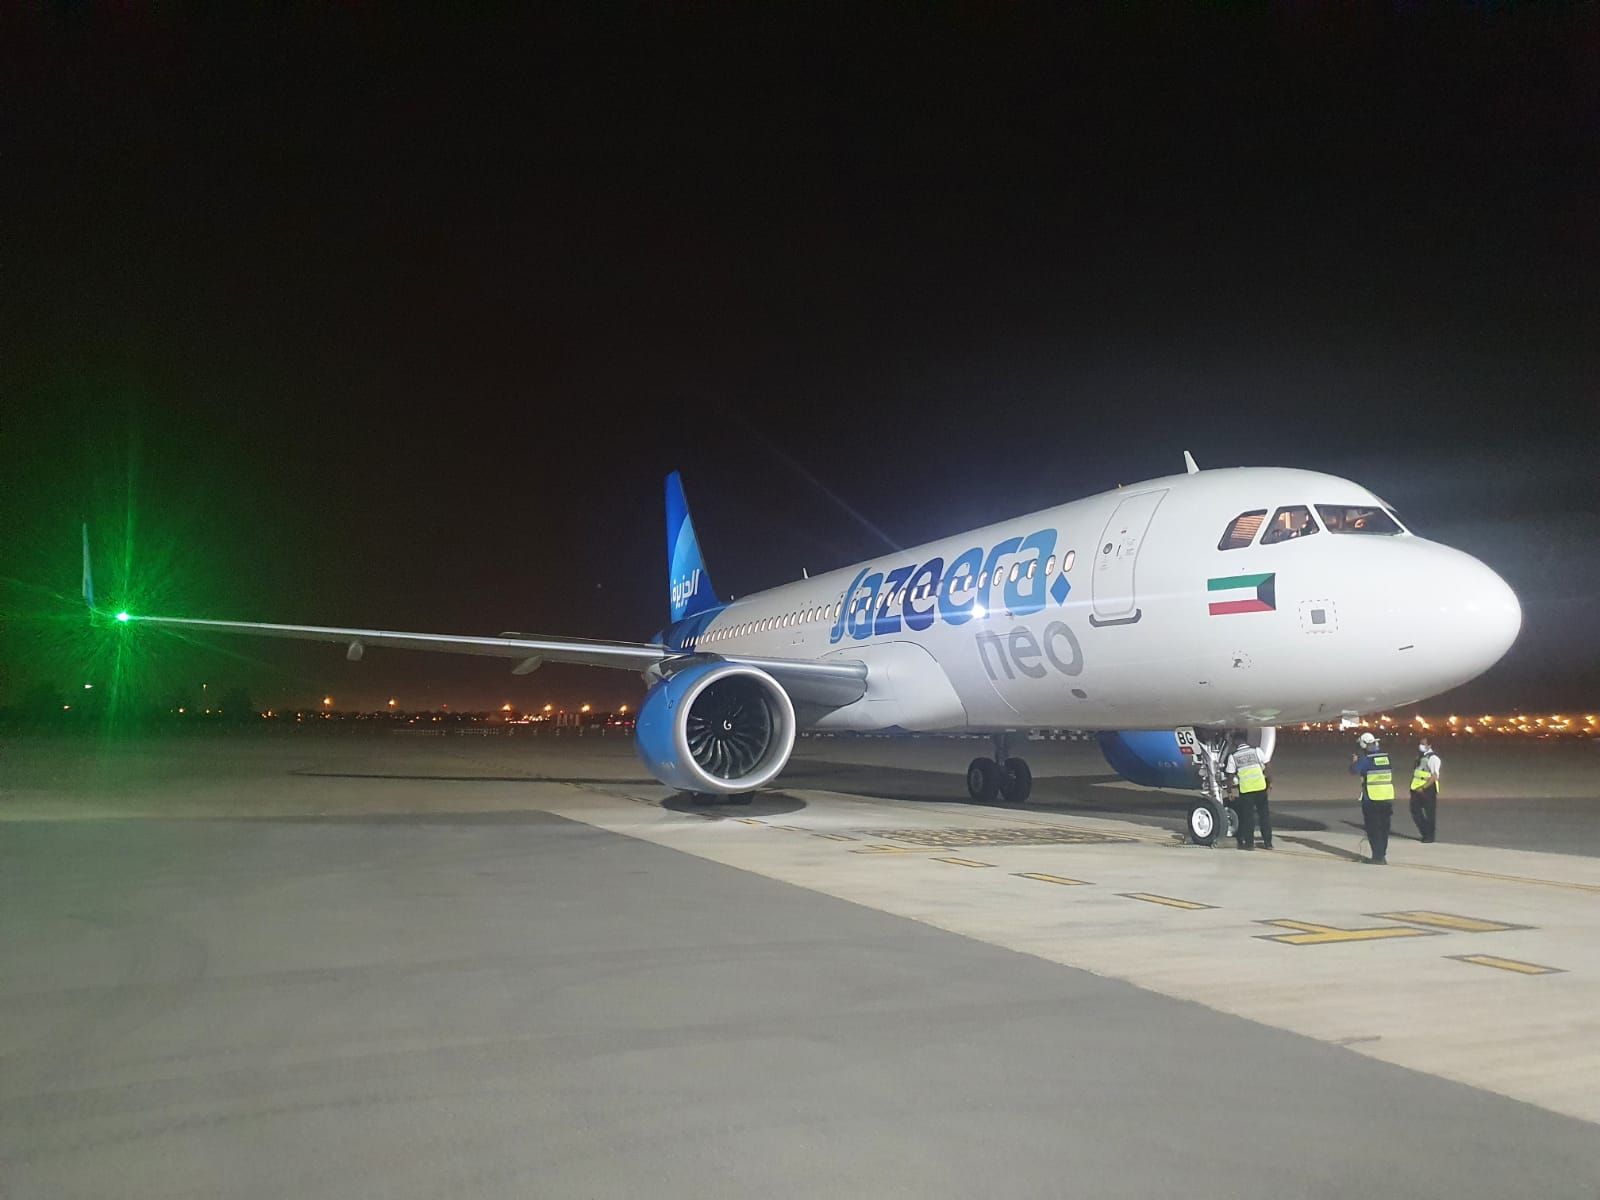 Jazeera new aircraft arrives to Kuwait